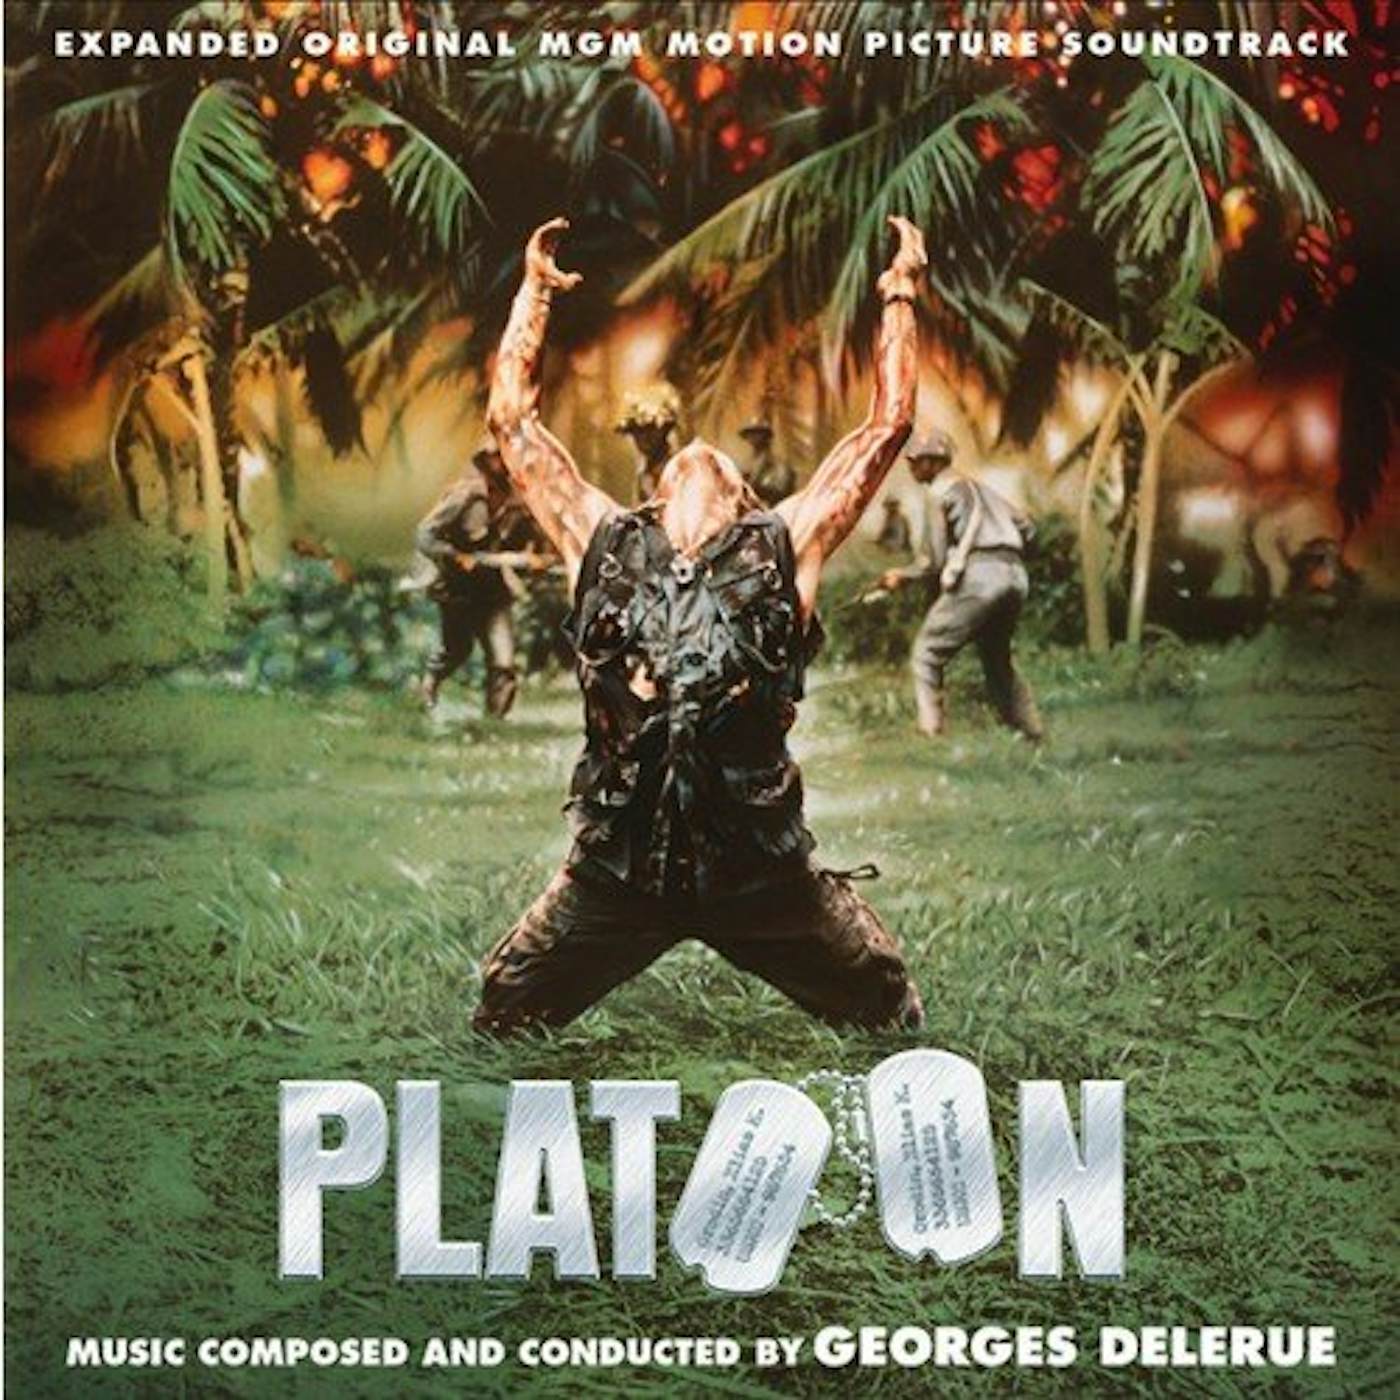 Georges Delerue PLATOON (1000 EDITION) / Original Soundtrack CD